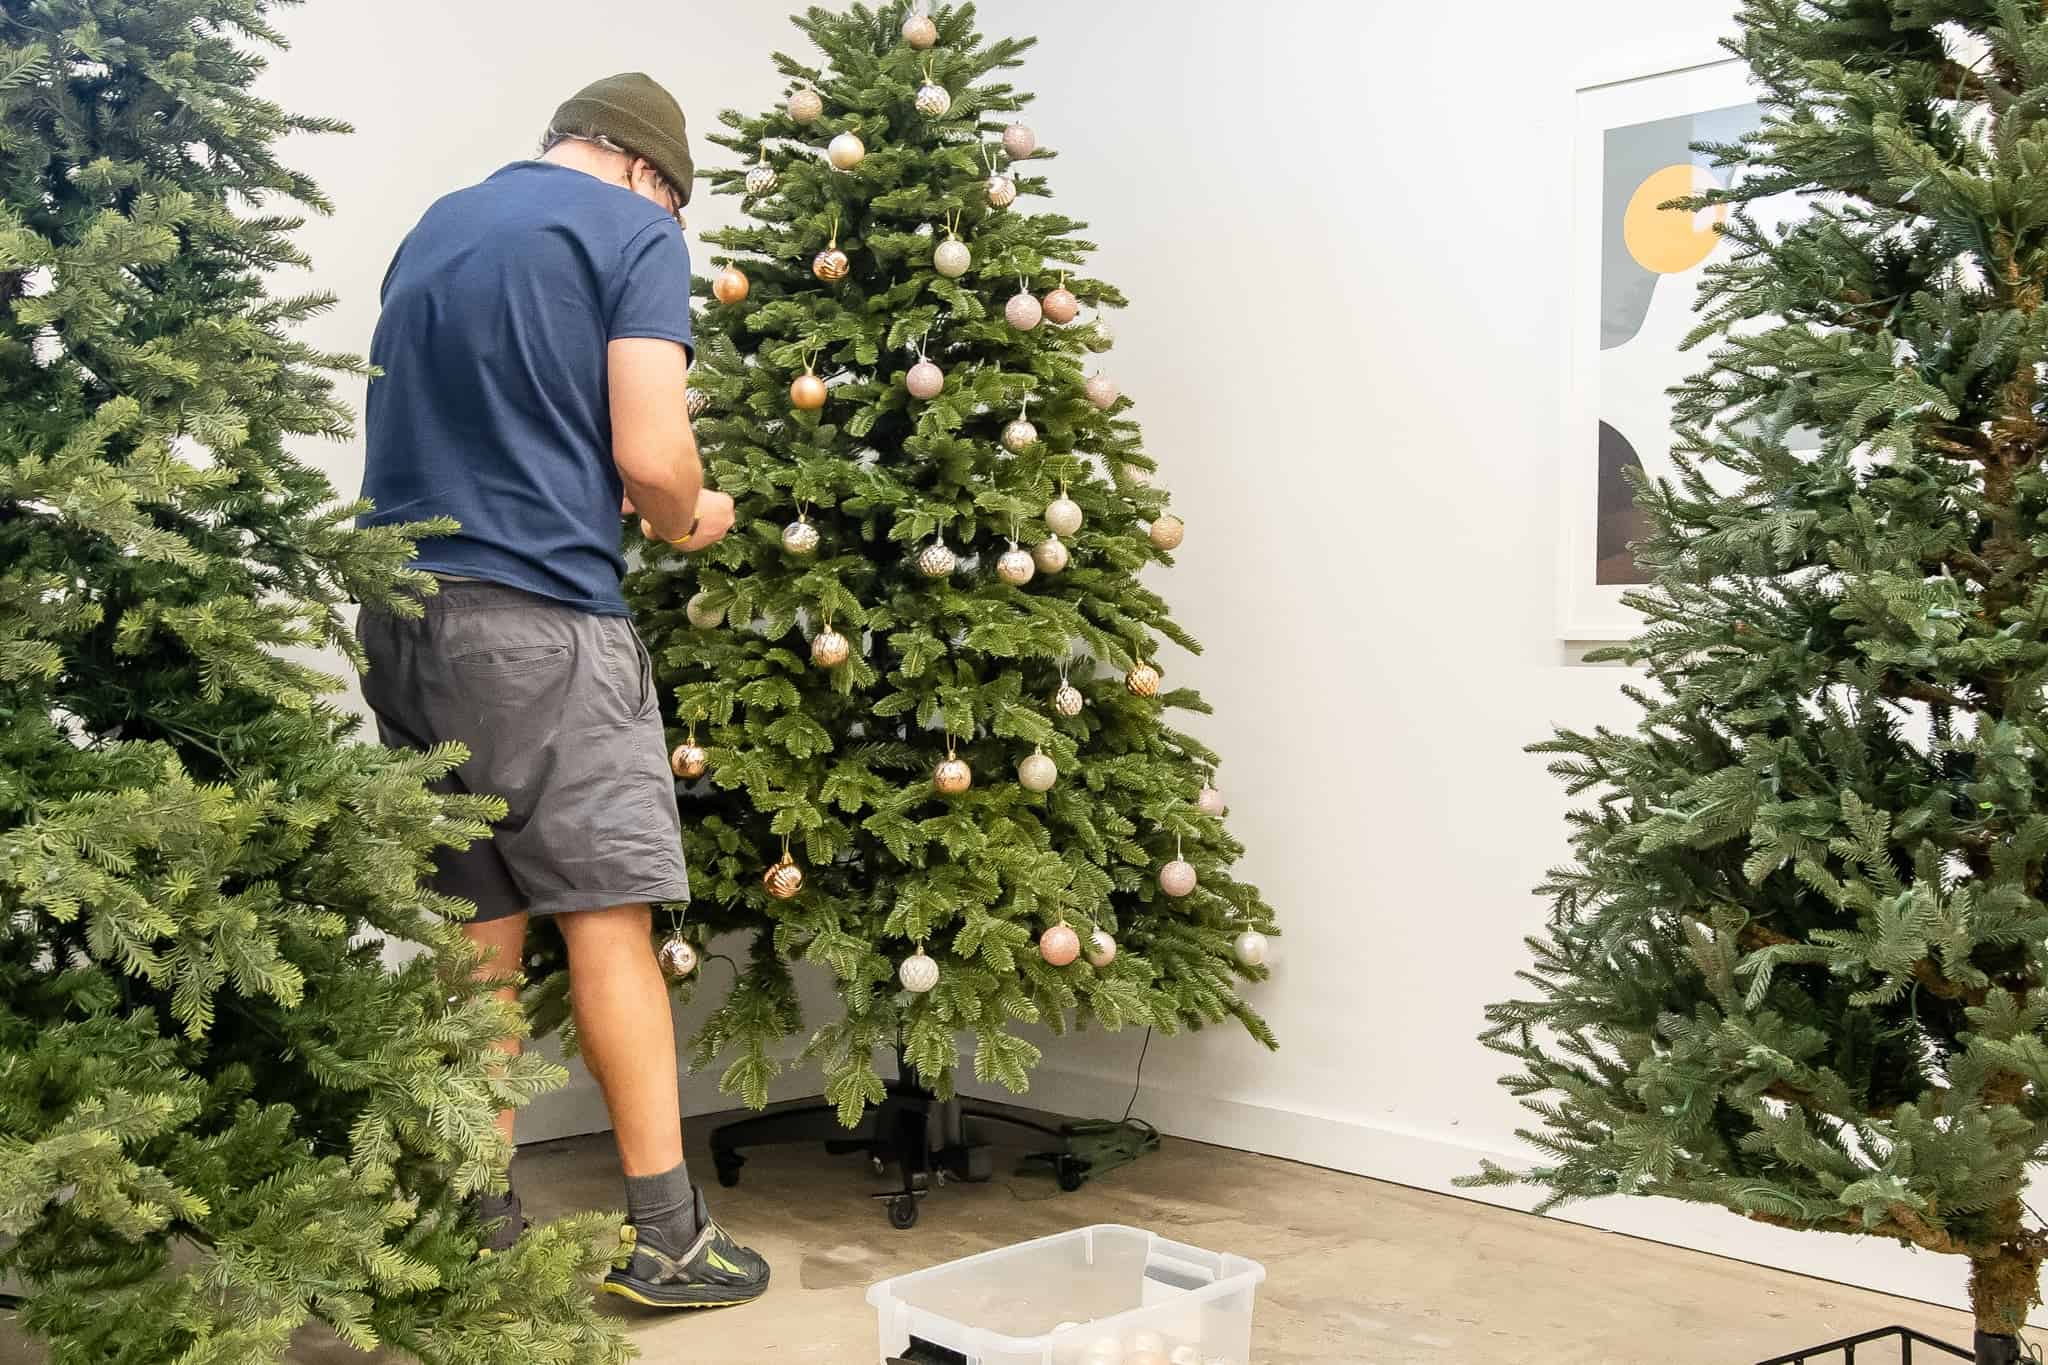 Saudi Arabia bans Christmas tree imports